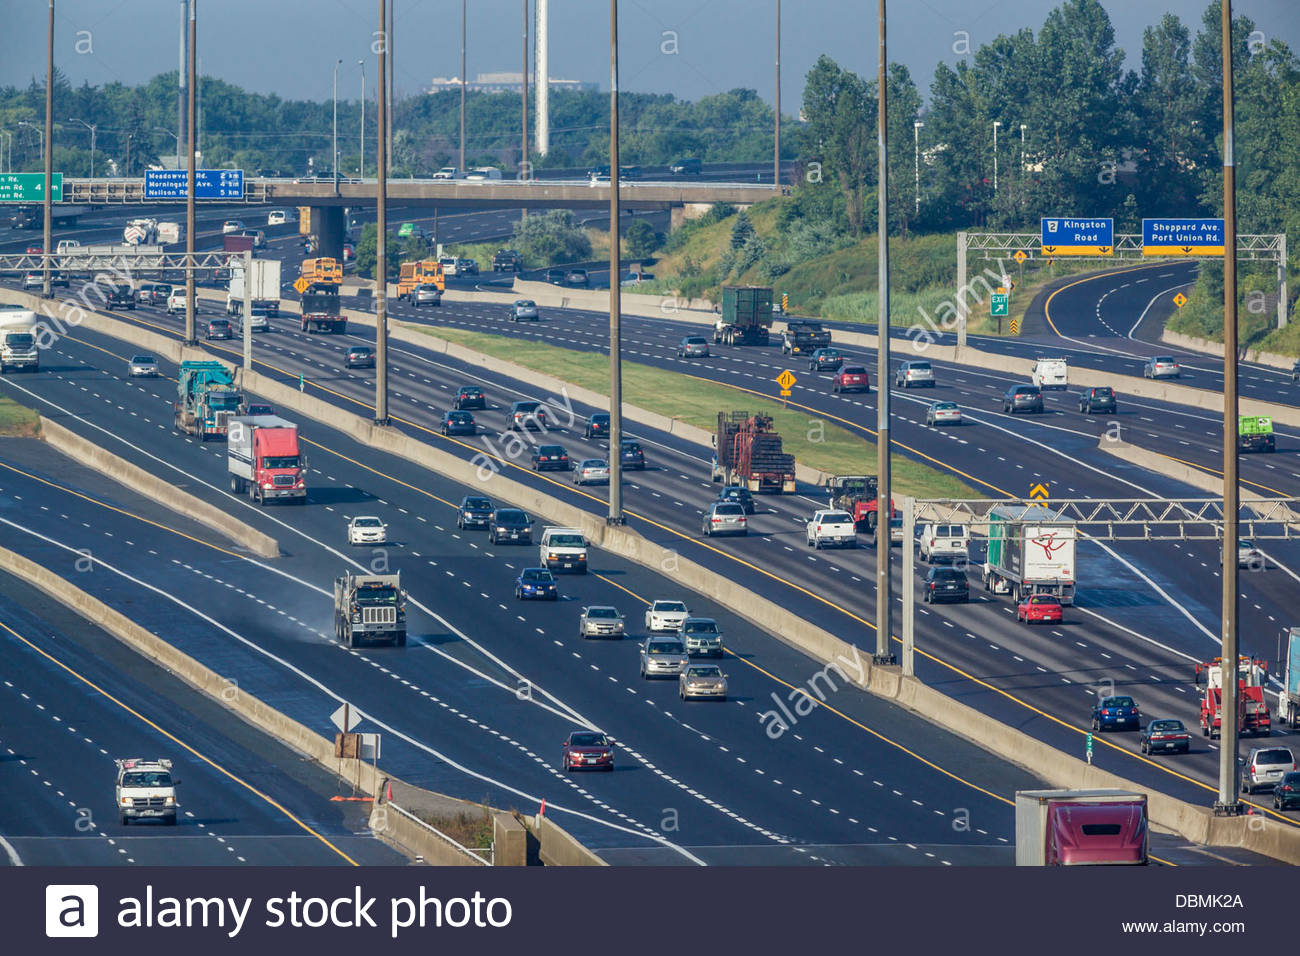 highway-401-or-macdonald-cartier-freeway-the-busiest-highway-in-north-DBMK2A.jpg